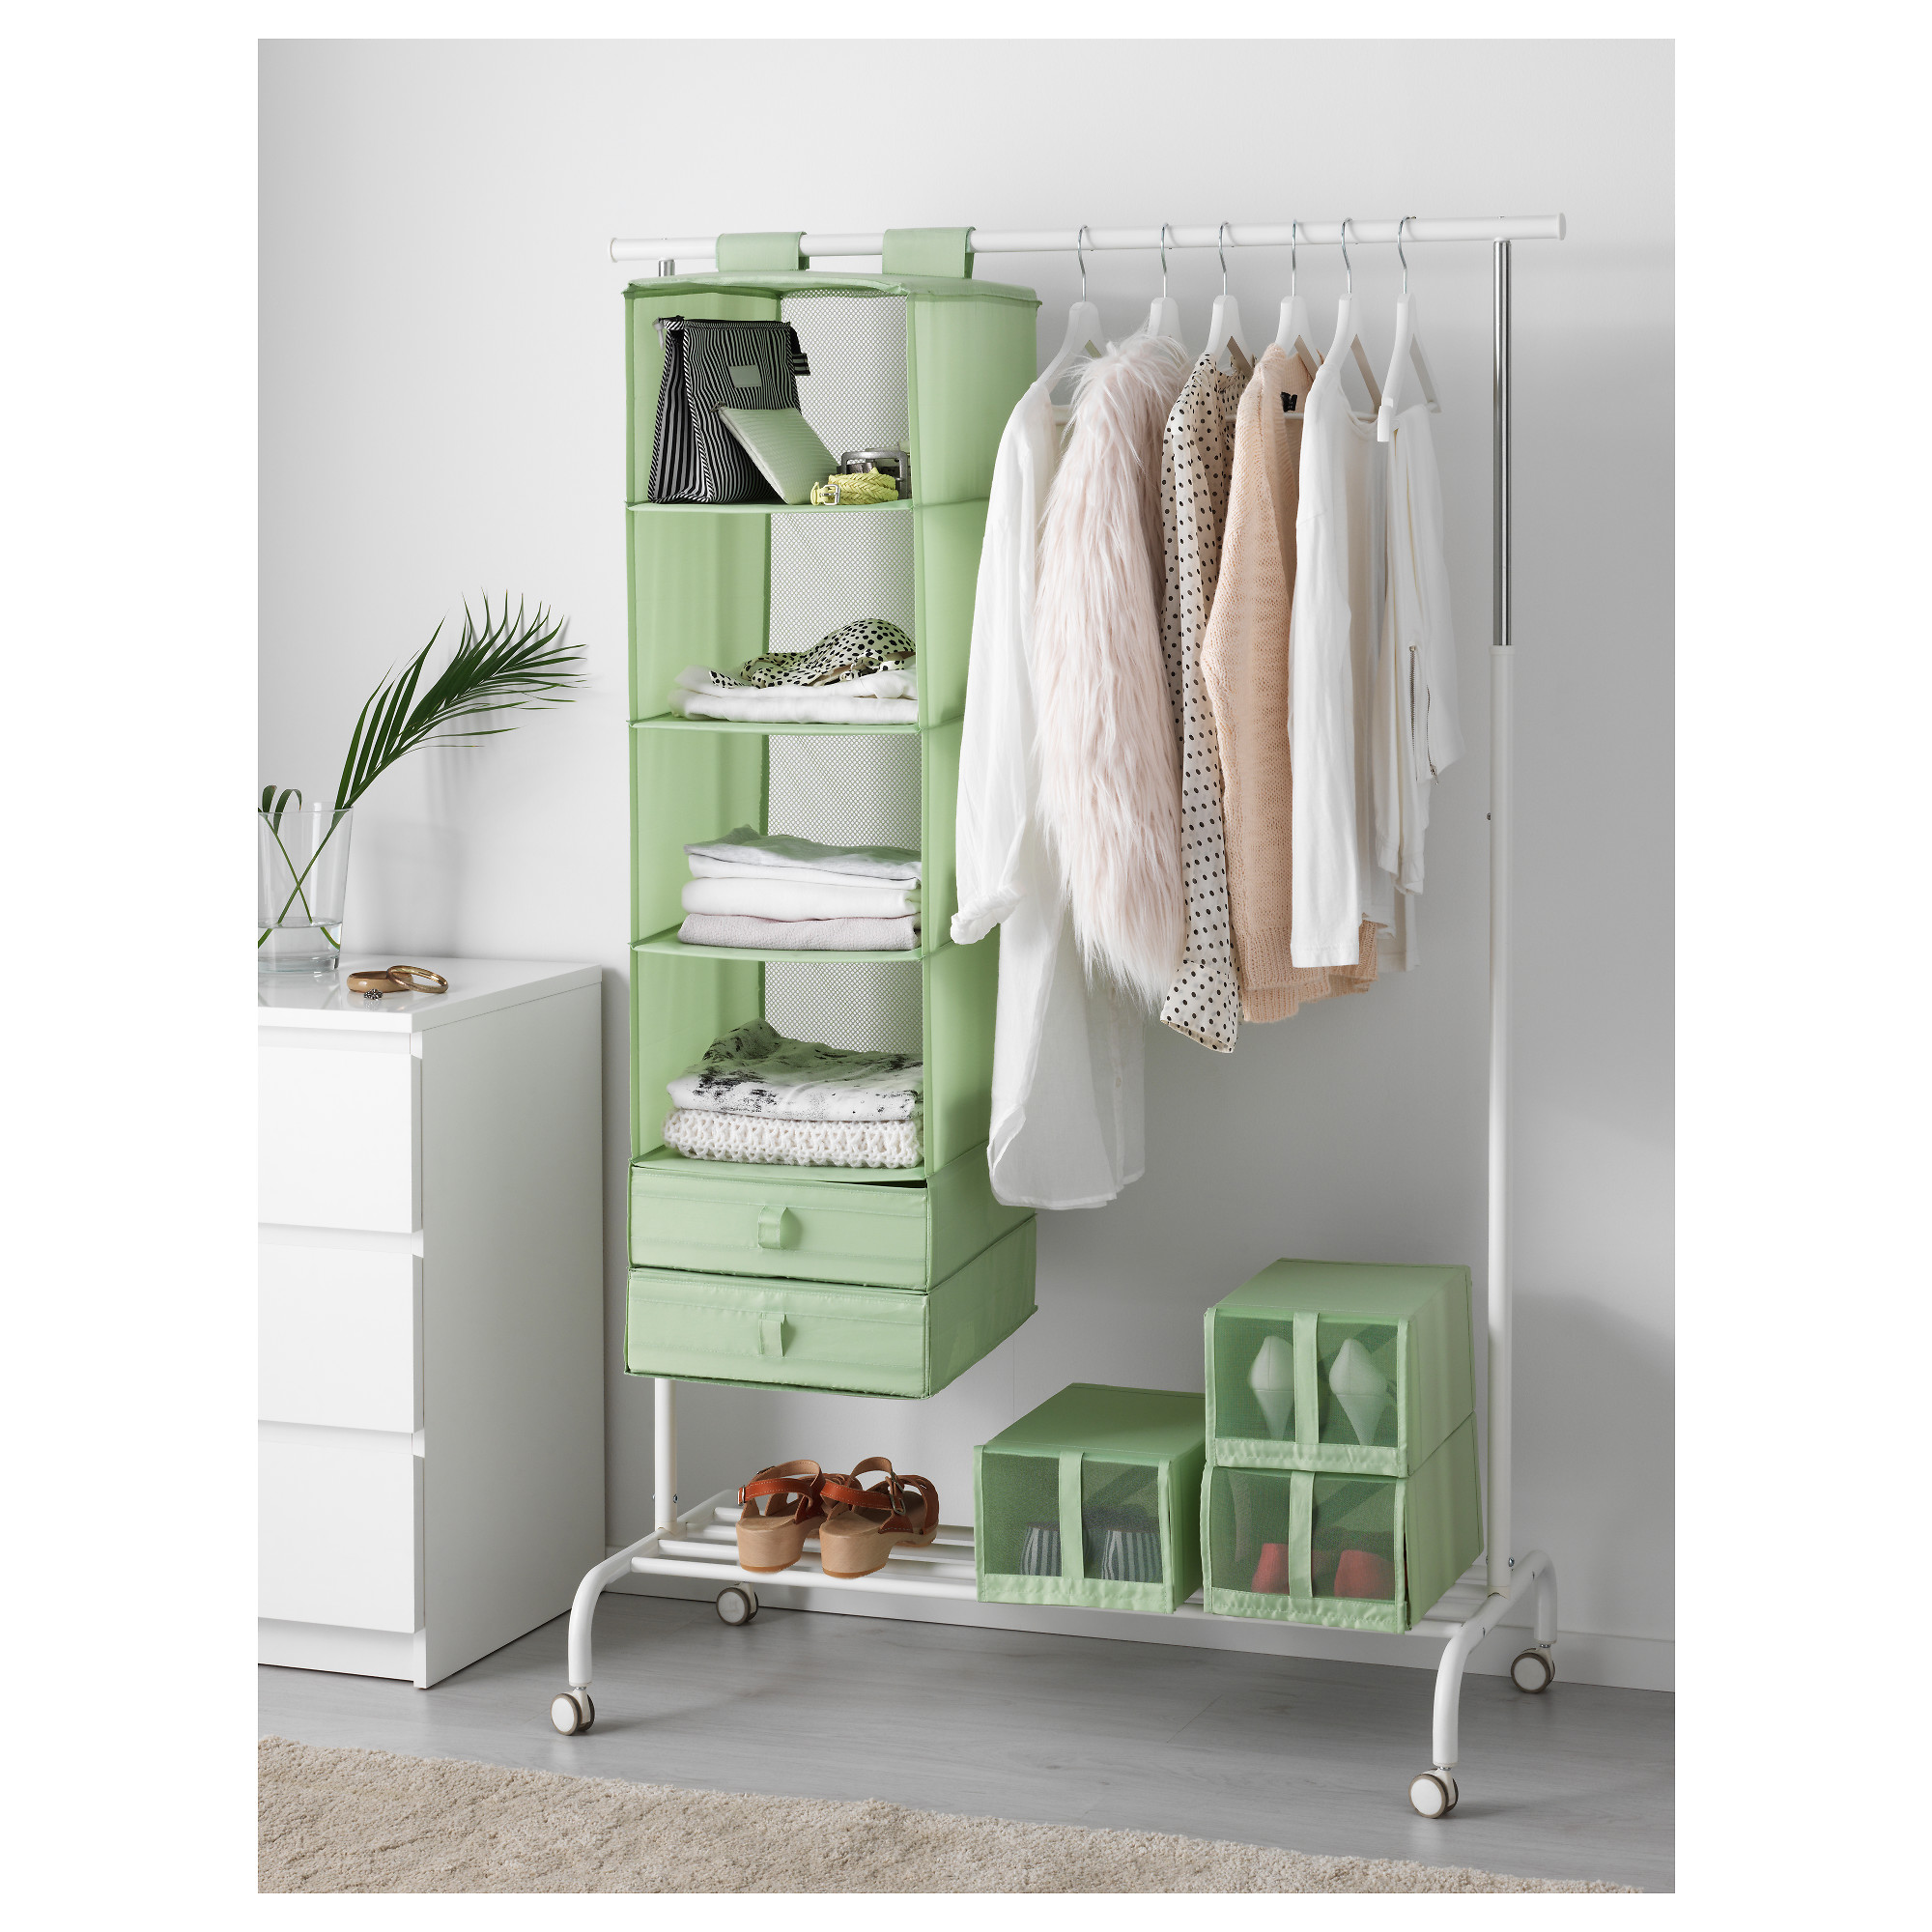 Easy storage for small spaces: IKEA SKUBB Organizer.